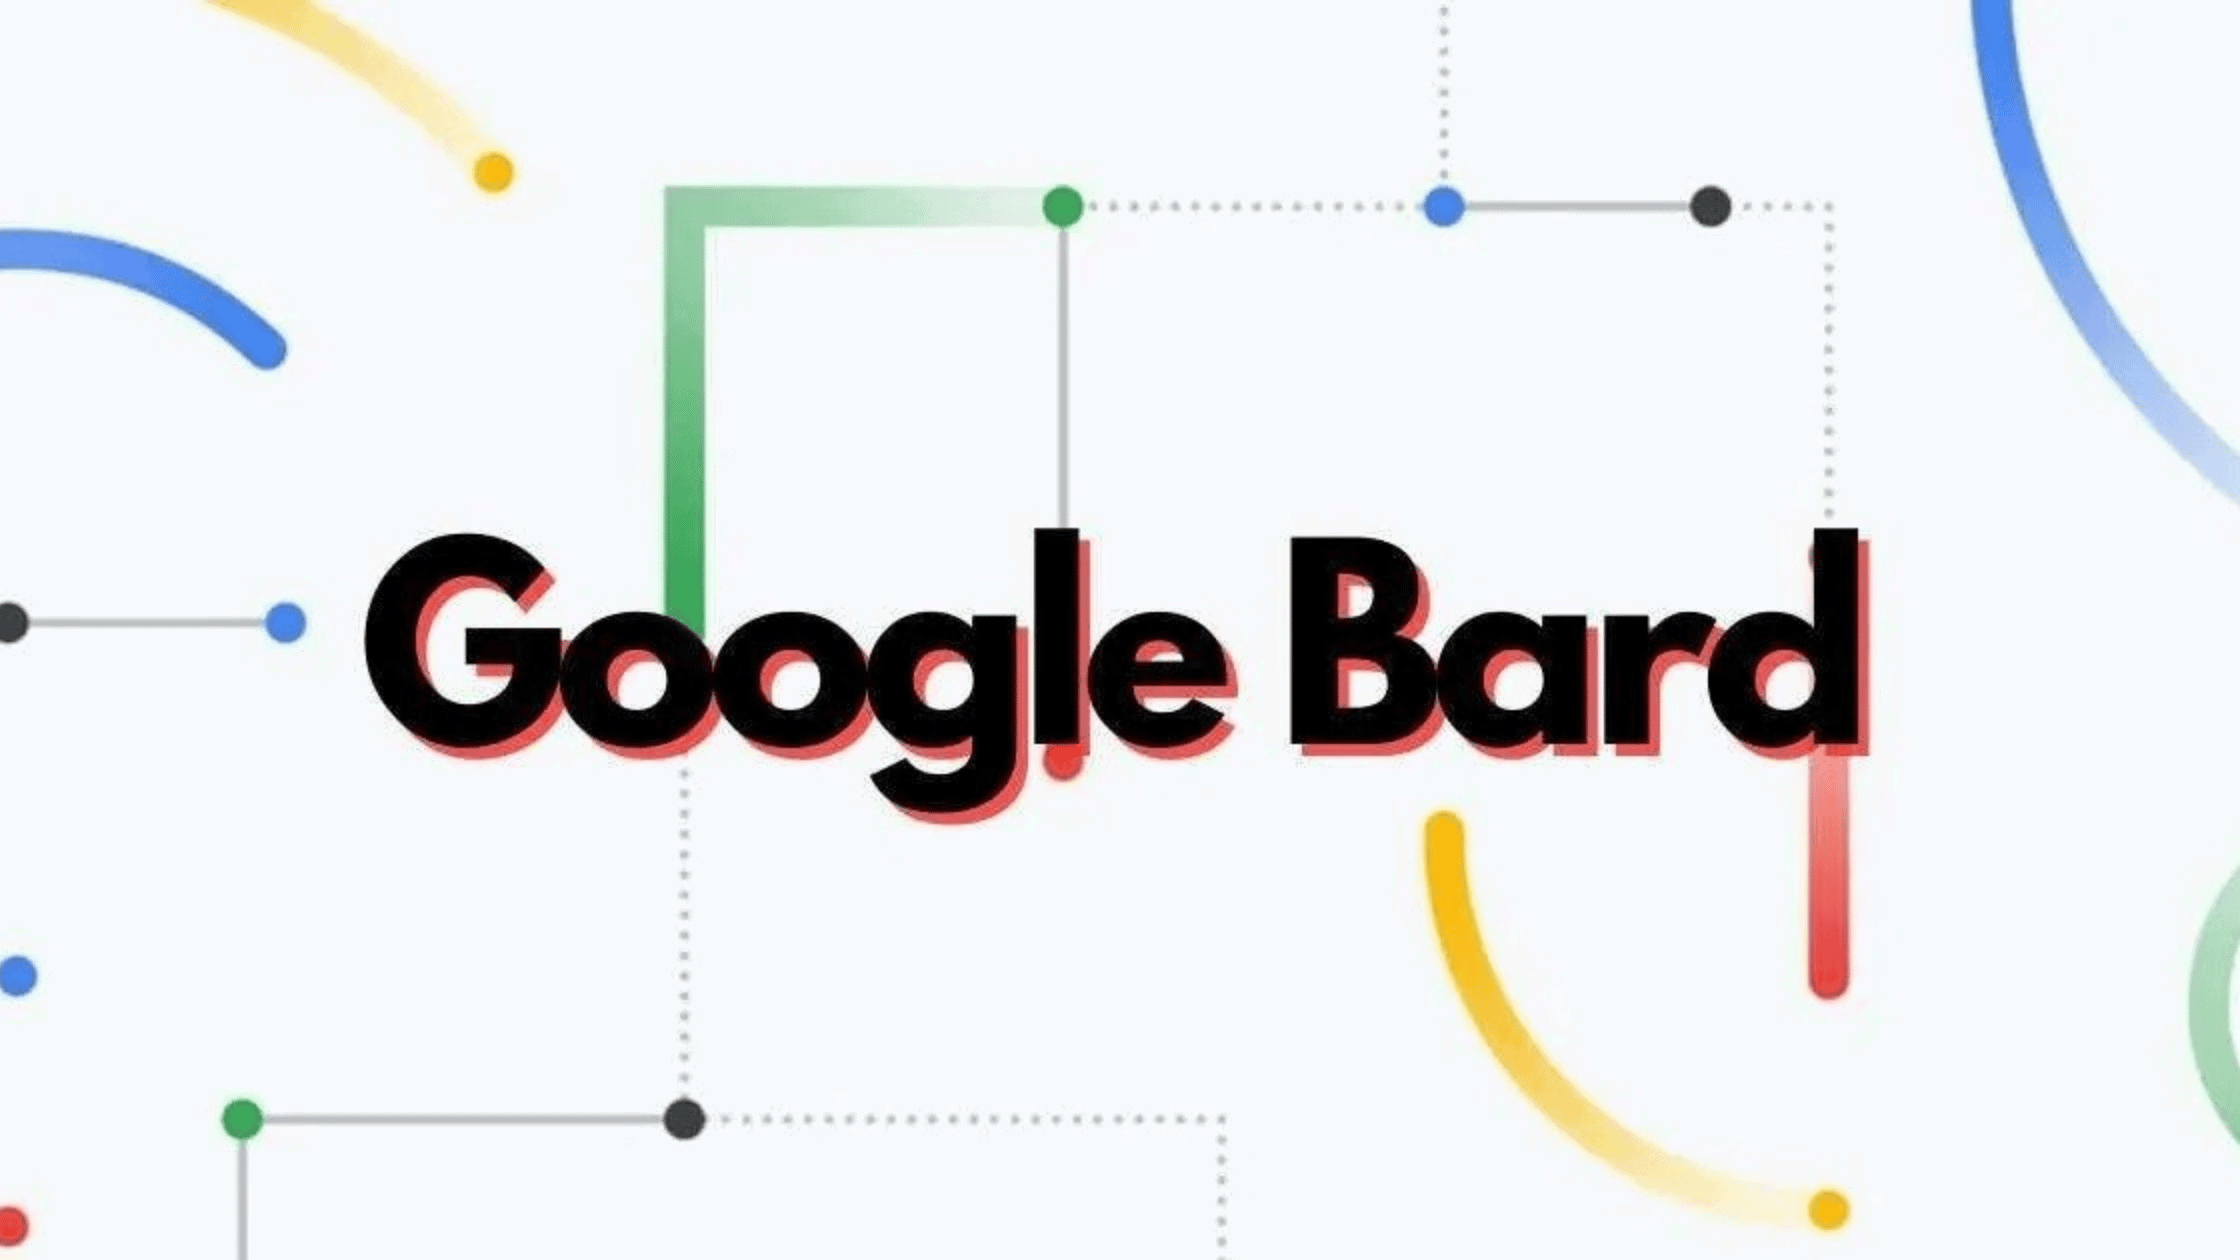 More information about "Το Bard εντάχθηκε στις υπηρεσίες και τις εφαρμογές της Google με νέες δυνατότητες"